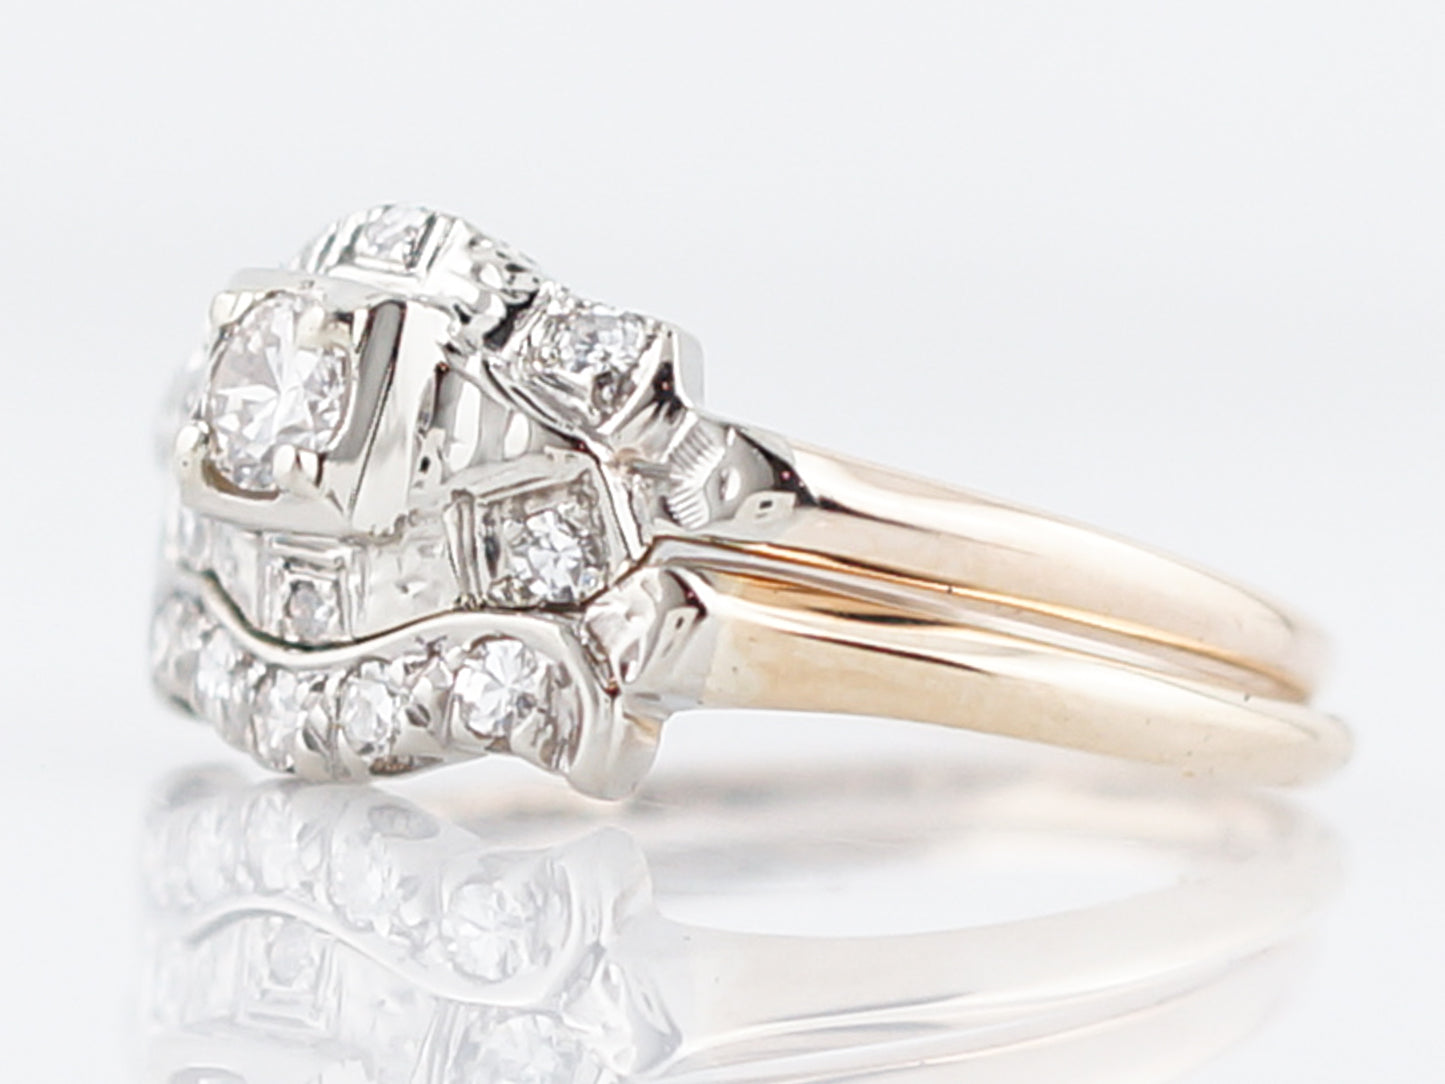 Vintage Engagement Ring Retro .14 Round Brilliant Cut Diamond in 14k Yellow & White Gold